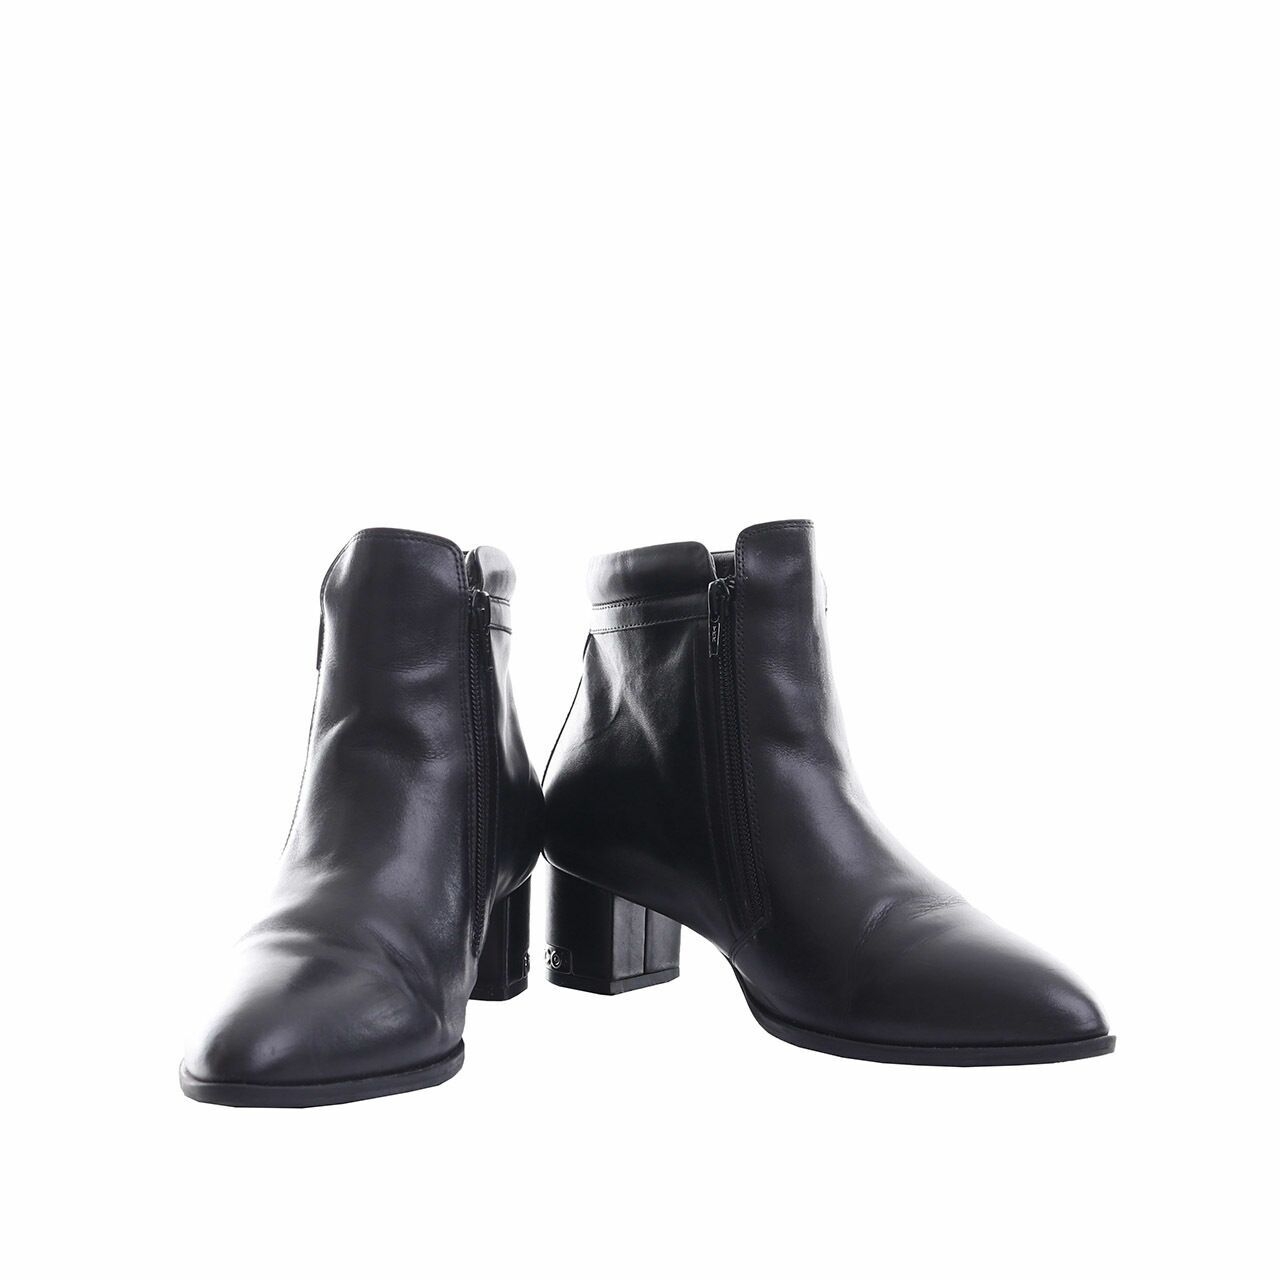 Bocorocco Ankle Black Heels Boots